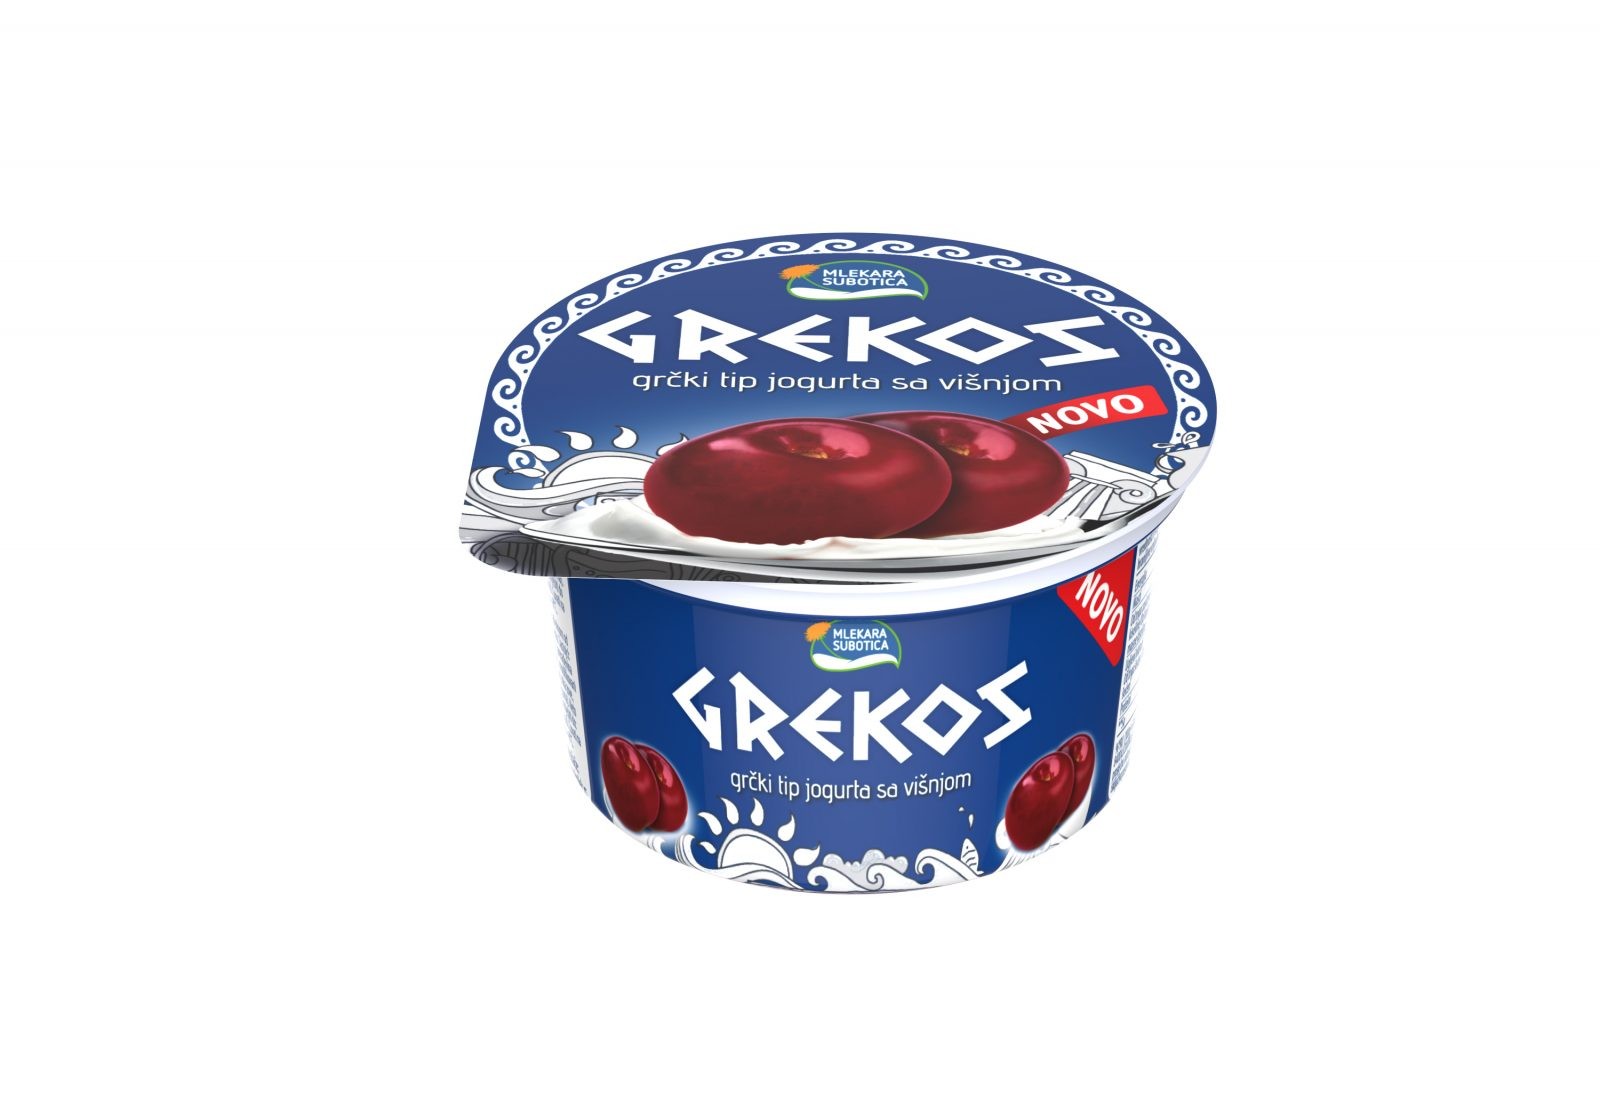 grekos jogurti, novi ukusi,visnja i sumsko voce,press srbija